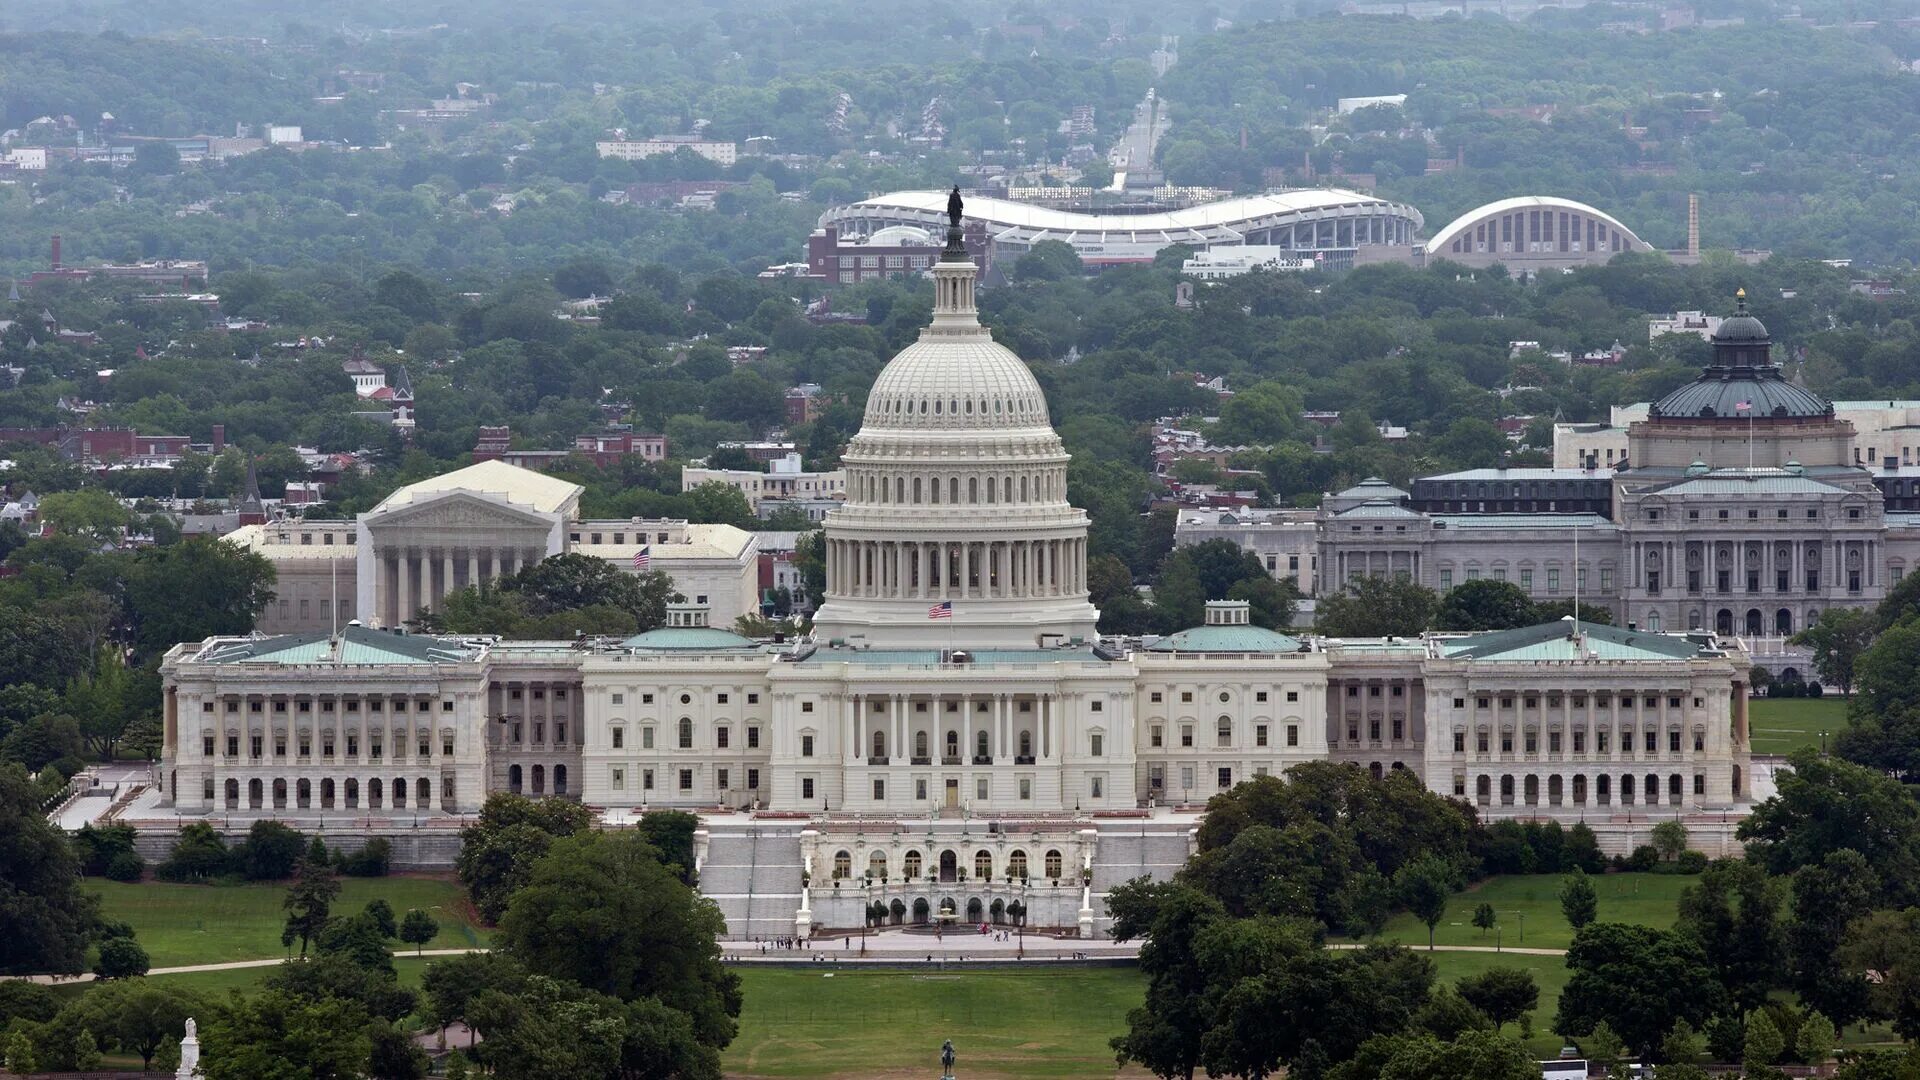 Сенат конгресса США. Здание Сената в Вашингтоне. Здание правительства США. Сенат США Капитолий.